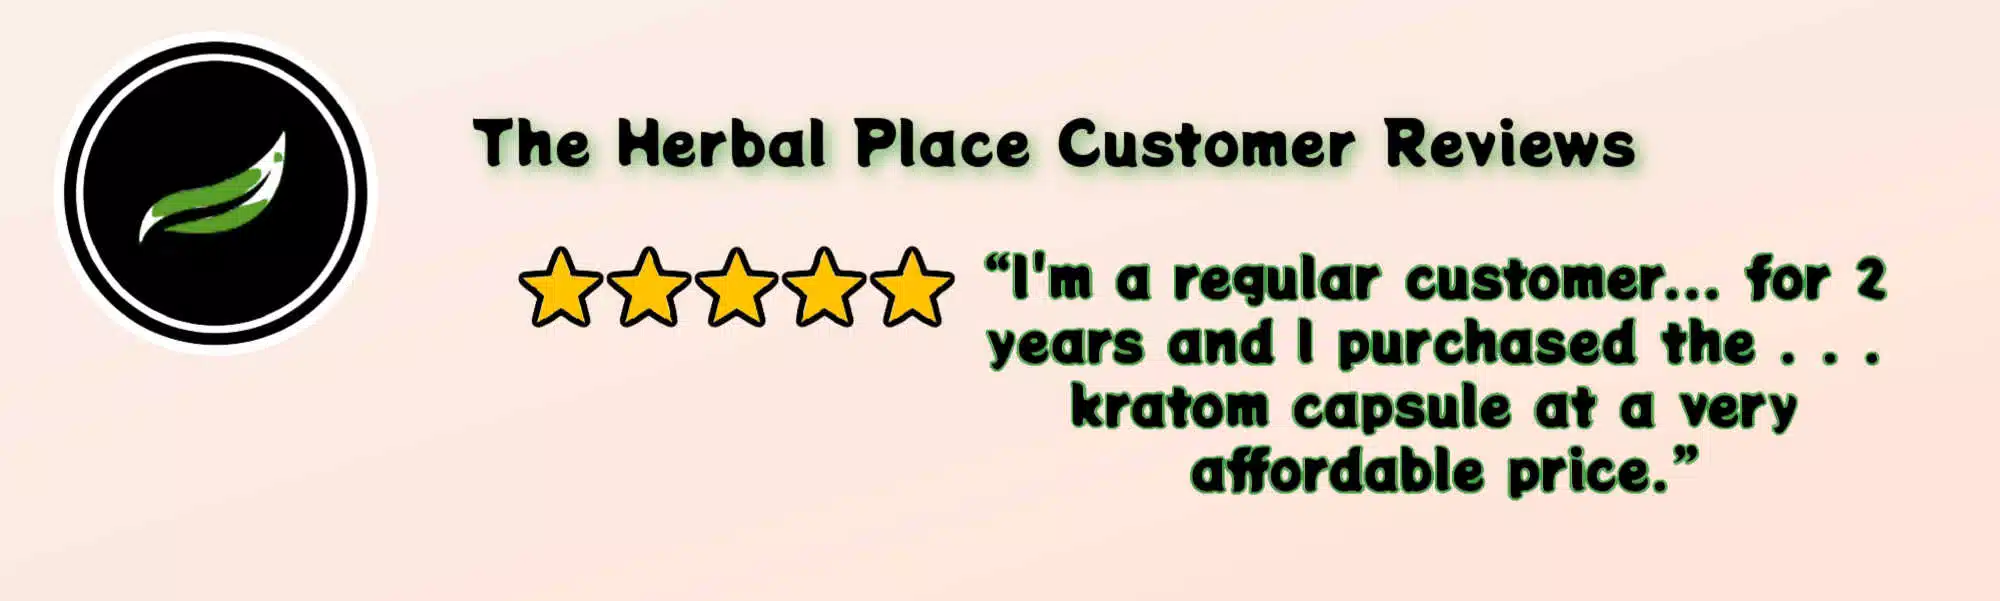 herbal place kratom customer reviews and plain logo